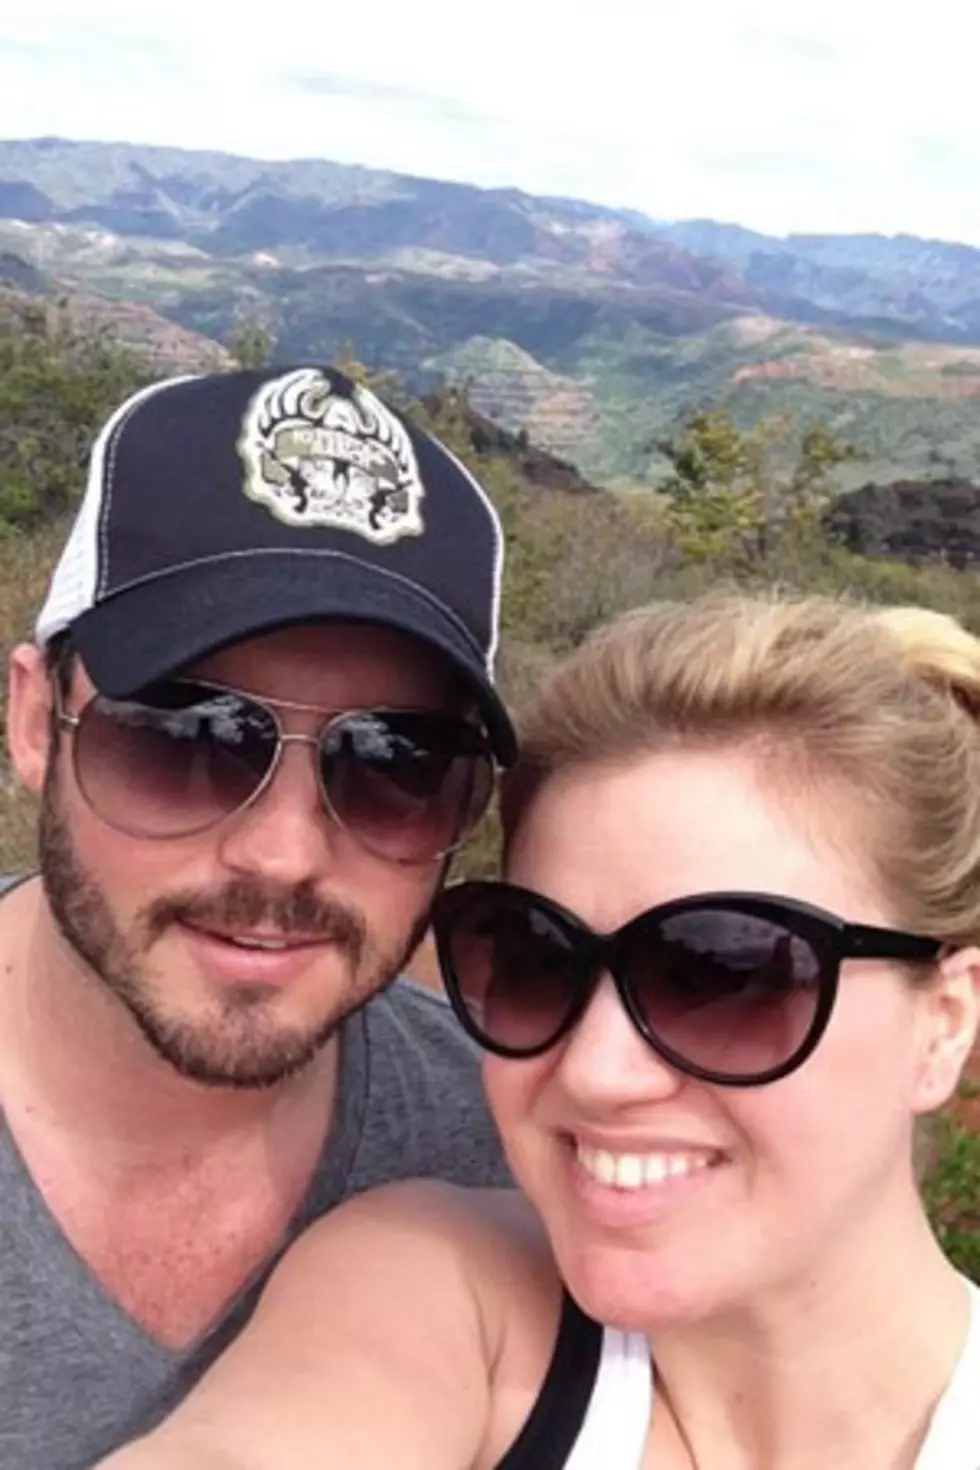 Kelly Clarkson Shares Romantic Vacation Photo With Fiance Brandon Blackstock